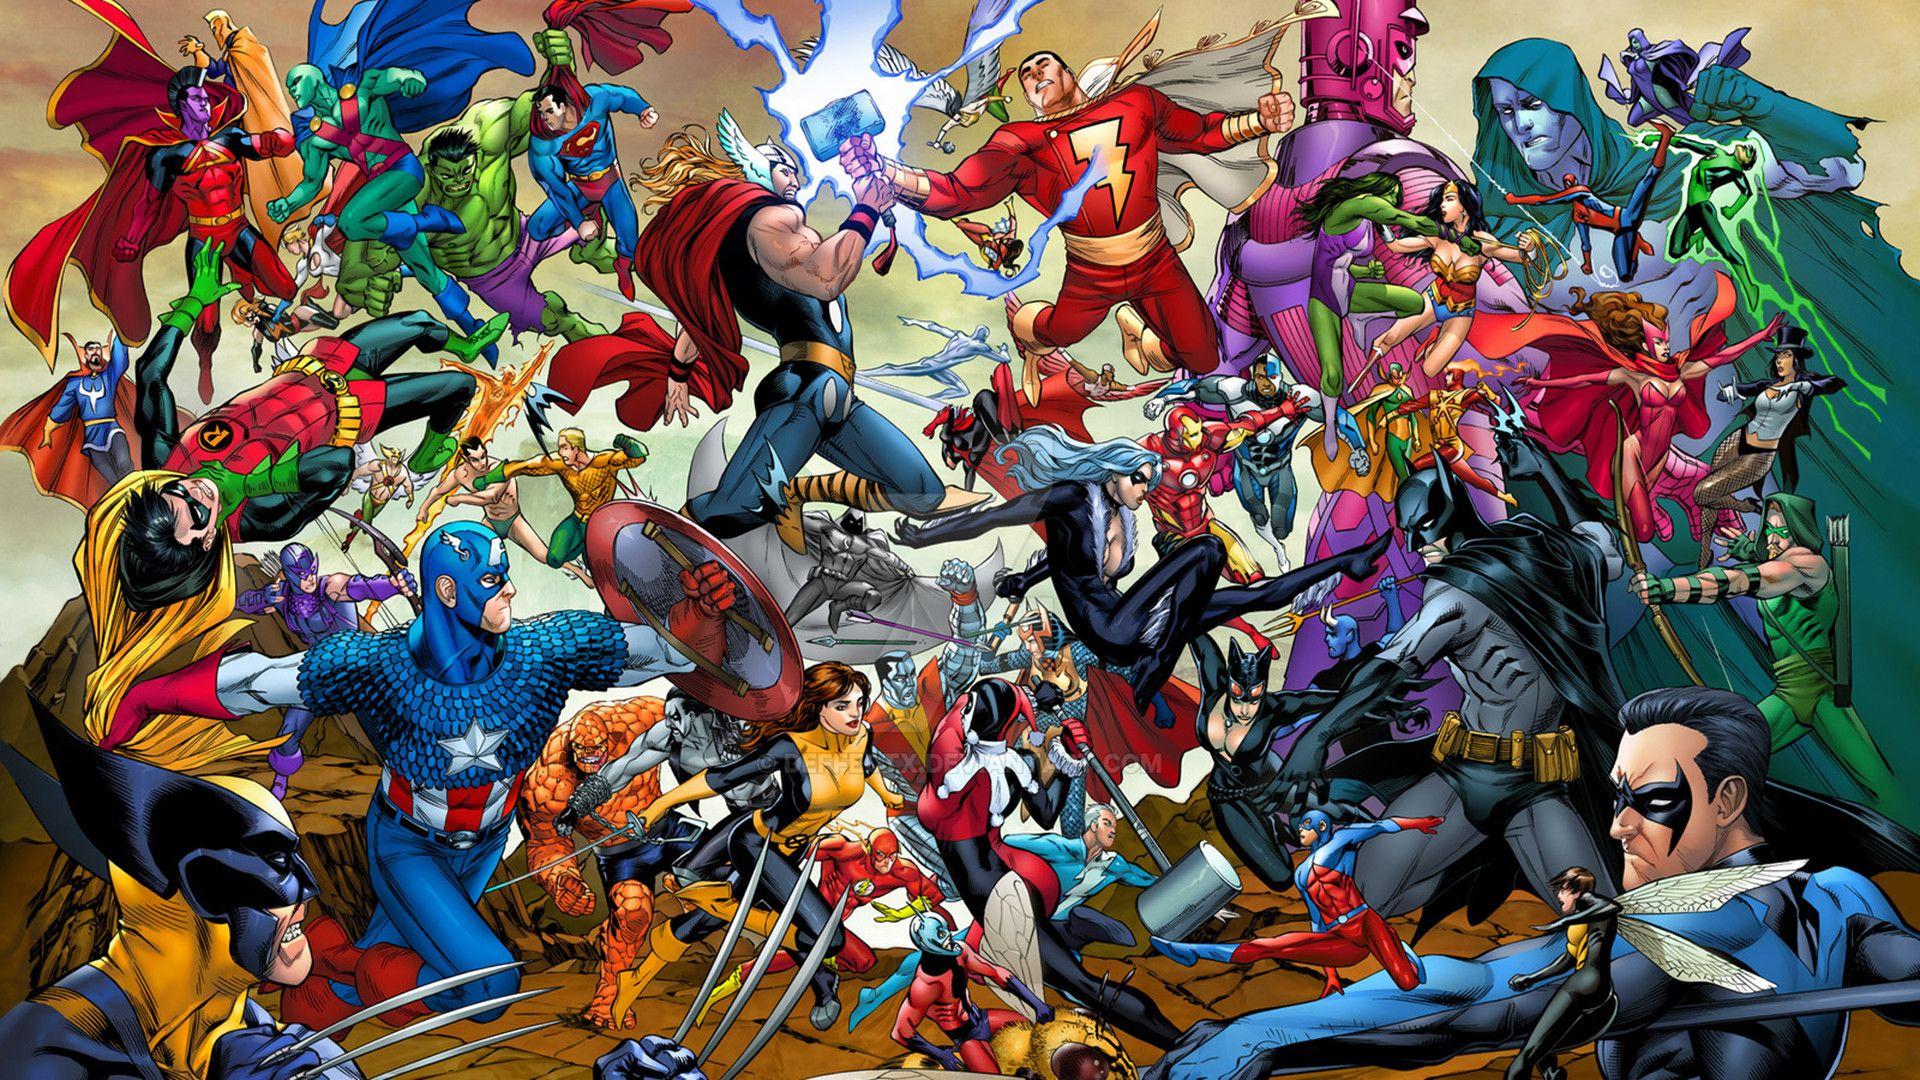 Marvel Vs Dc Wallpaper background picture